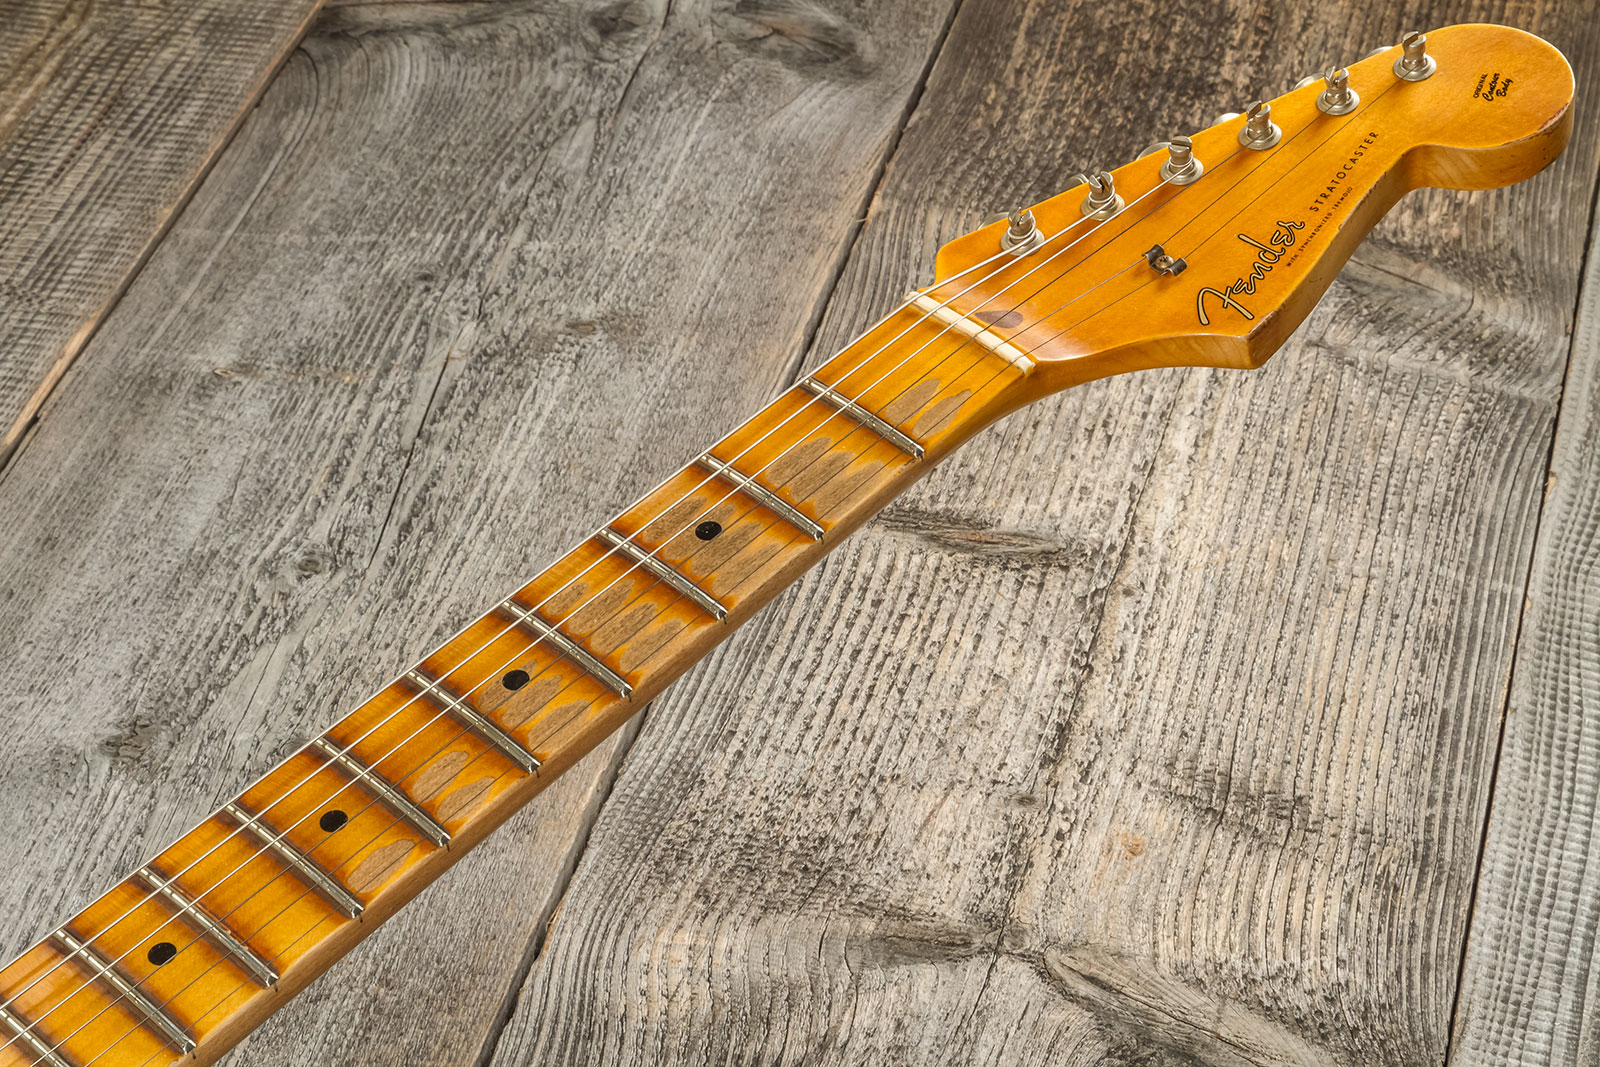 Fender Custom Shop Strat Fat 50's 3s Trem Mn #cz570495 - Relic India Ivory - Elektrische gitaar in Str-vorm - Variation 7